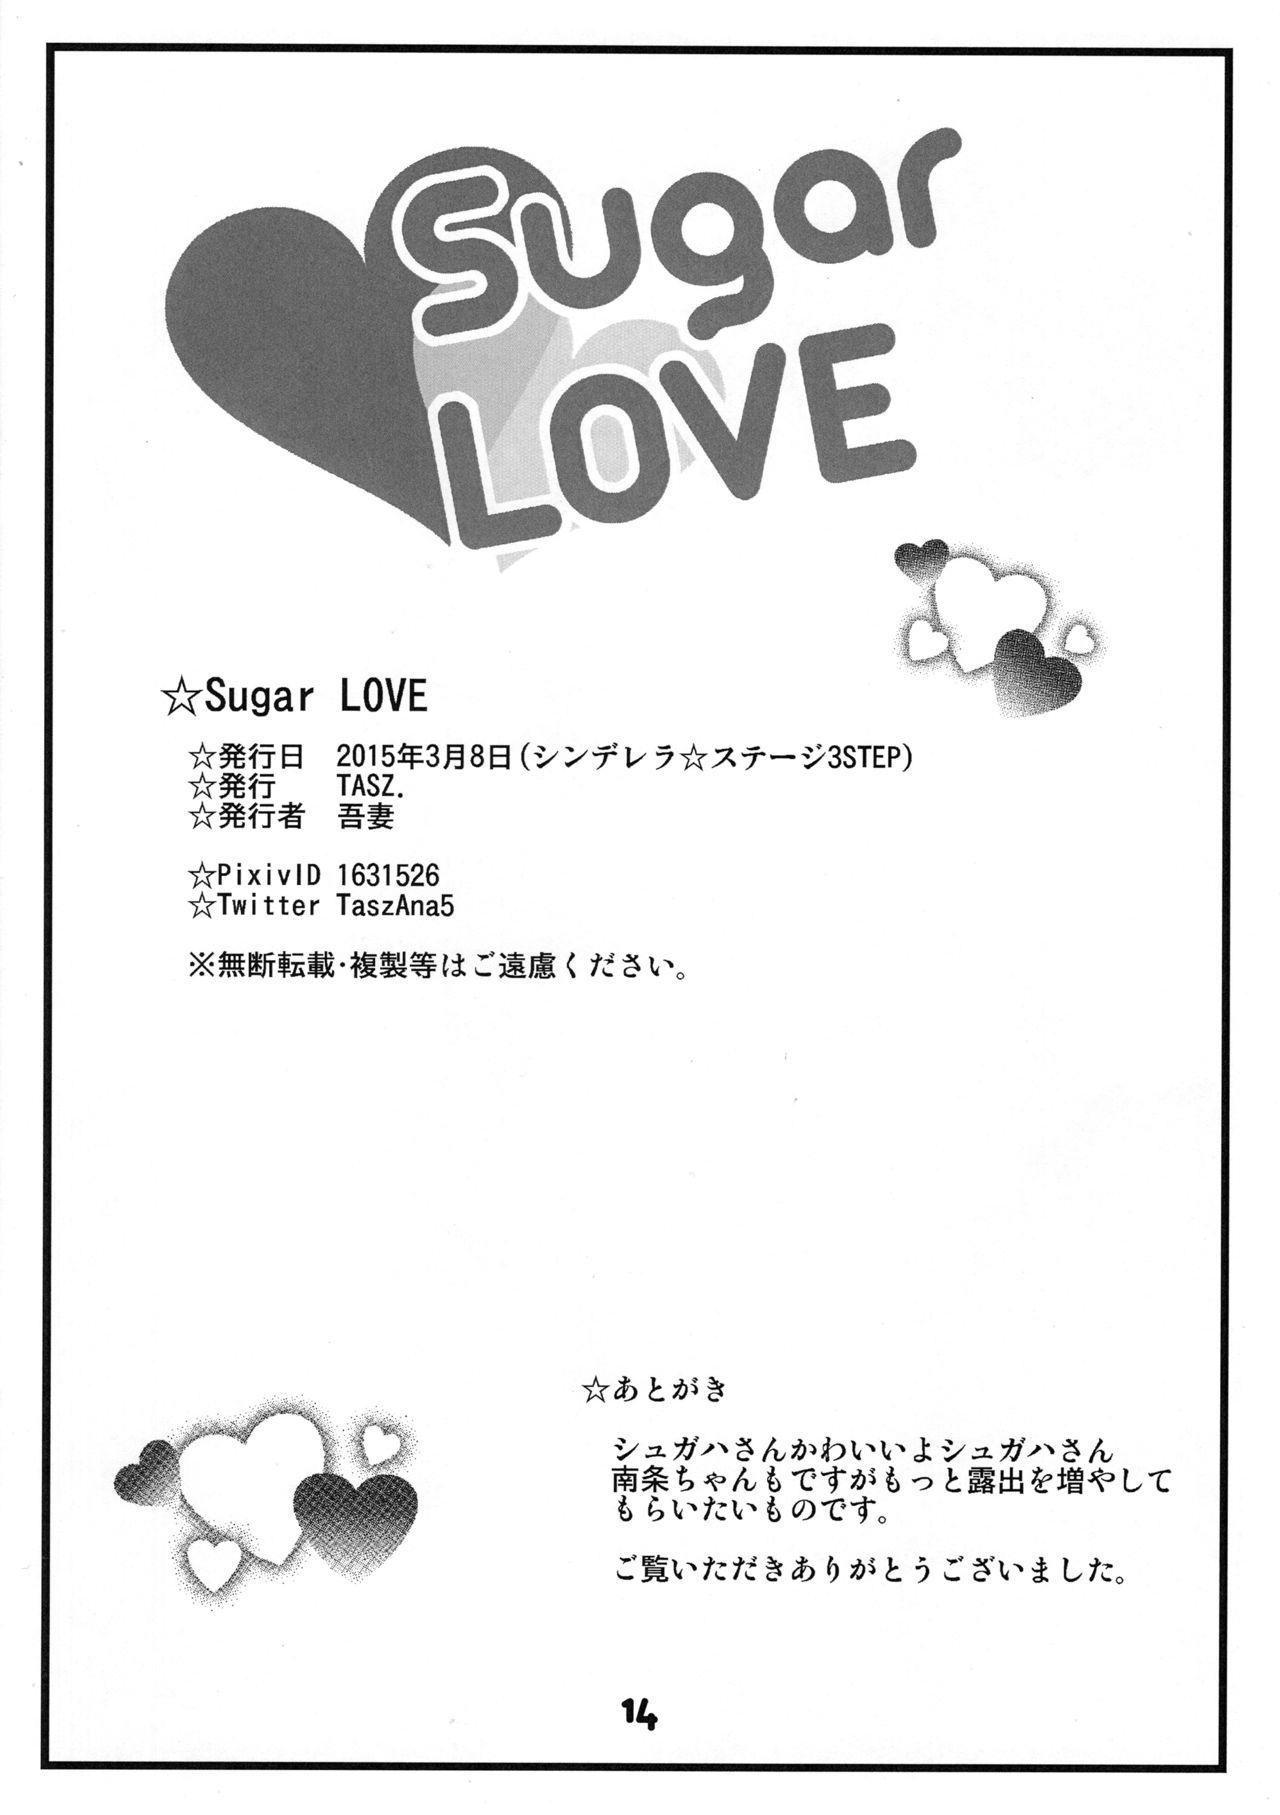 Sugar LOVE 12